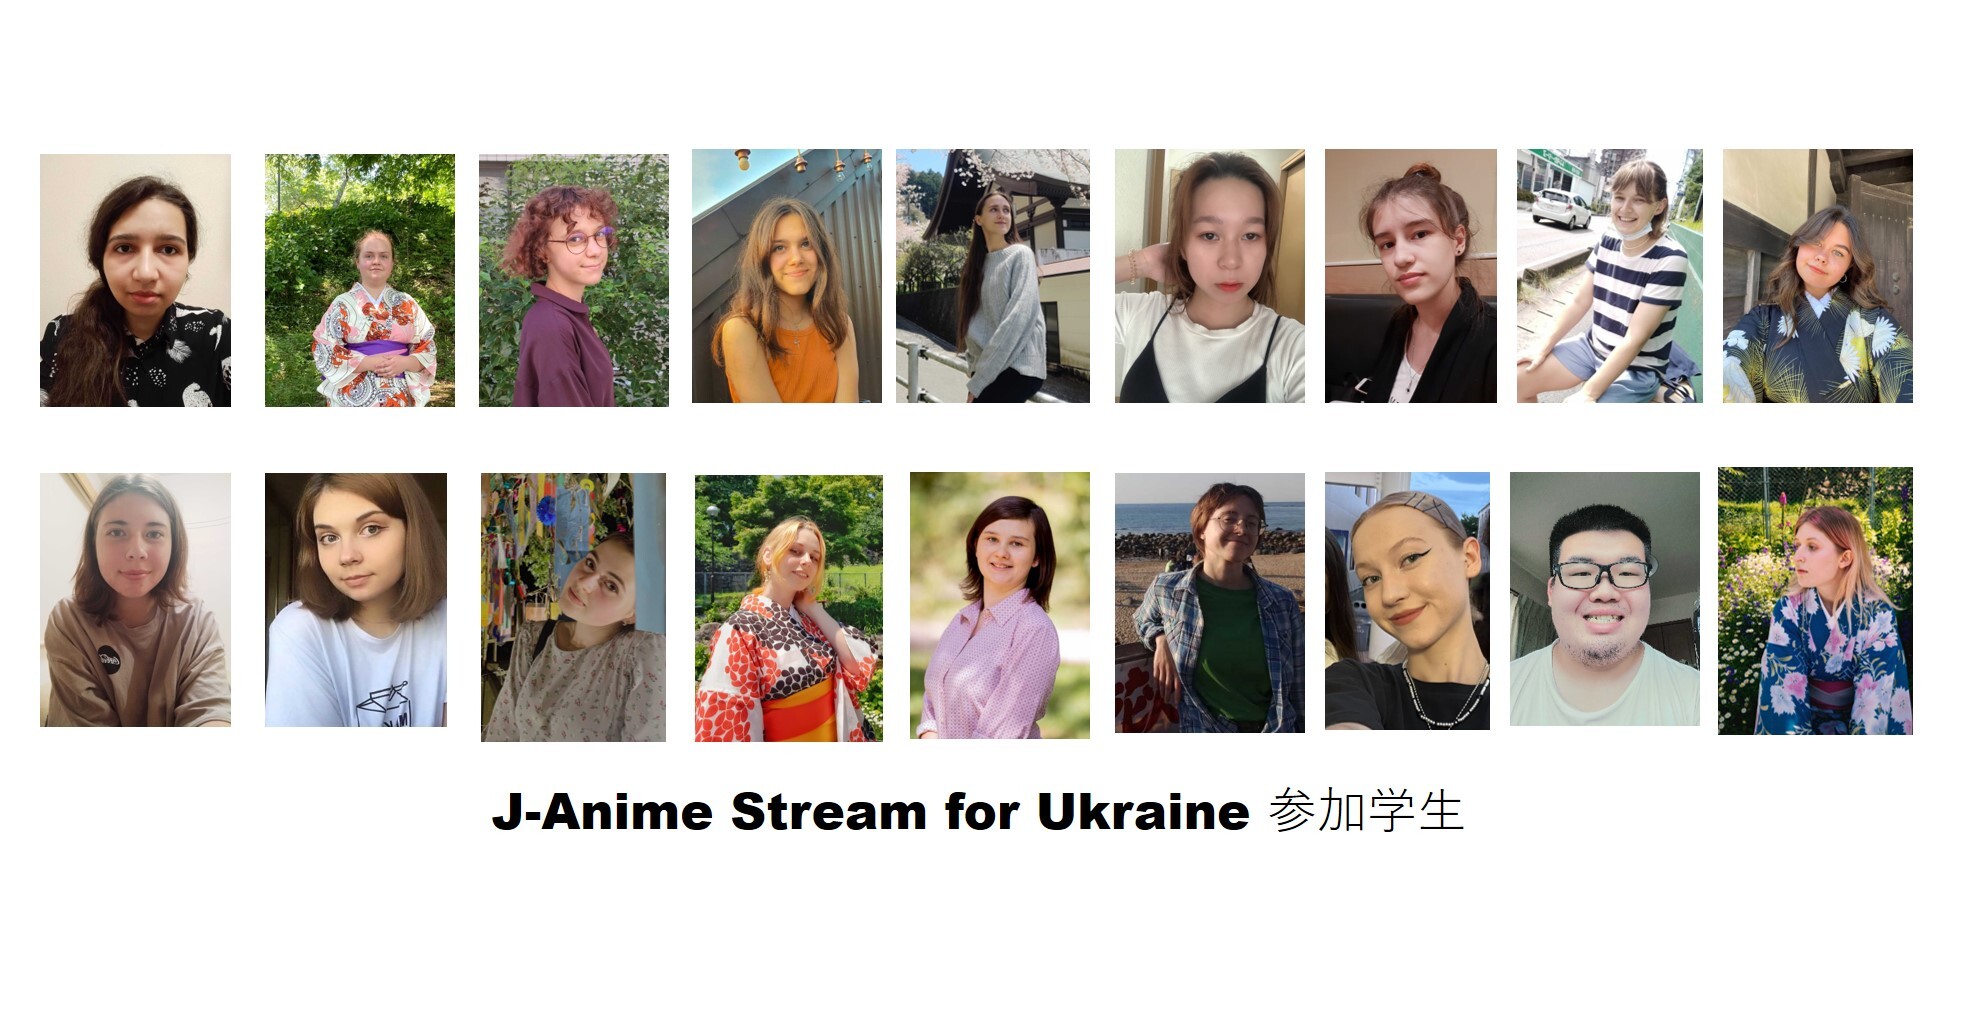 J-Anime Stream for Ukraine